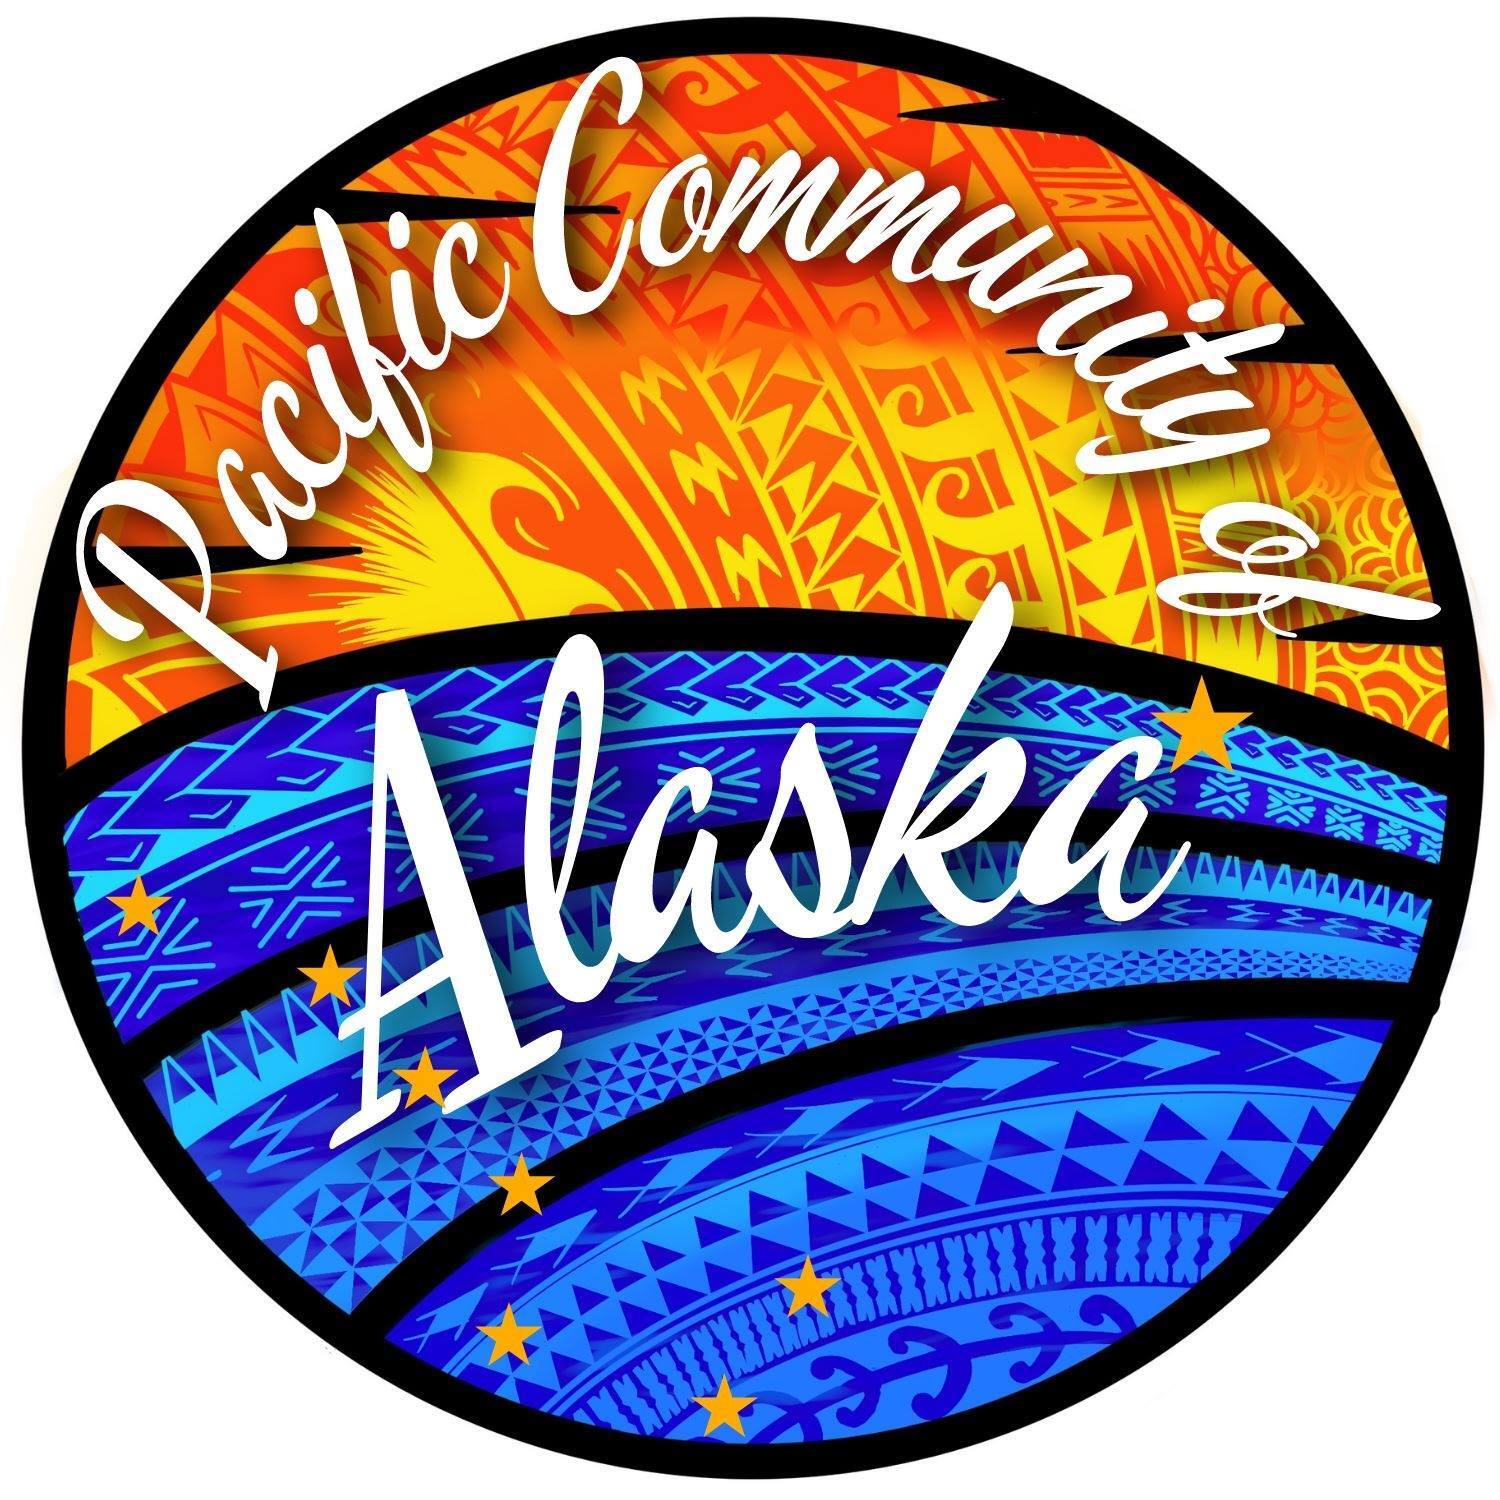 Pacific Community of Alaska